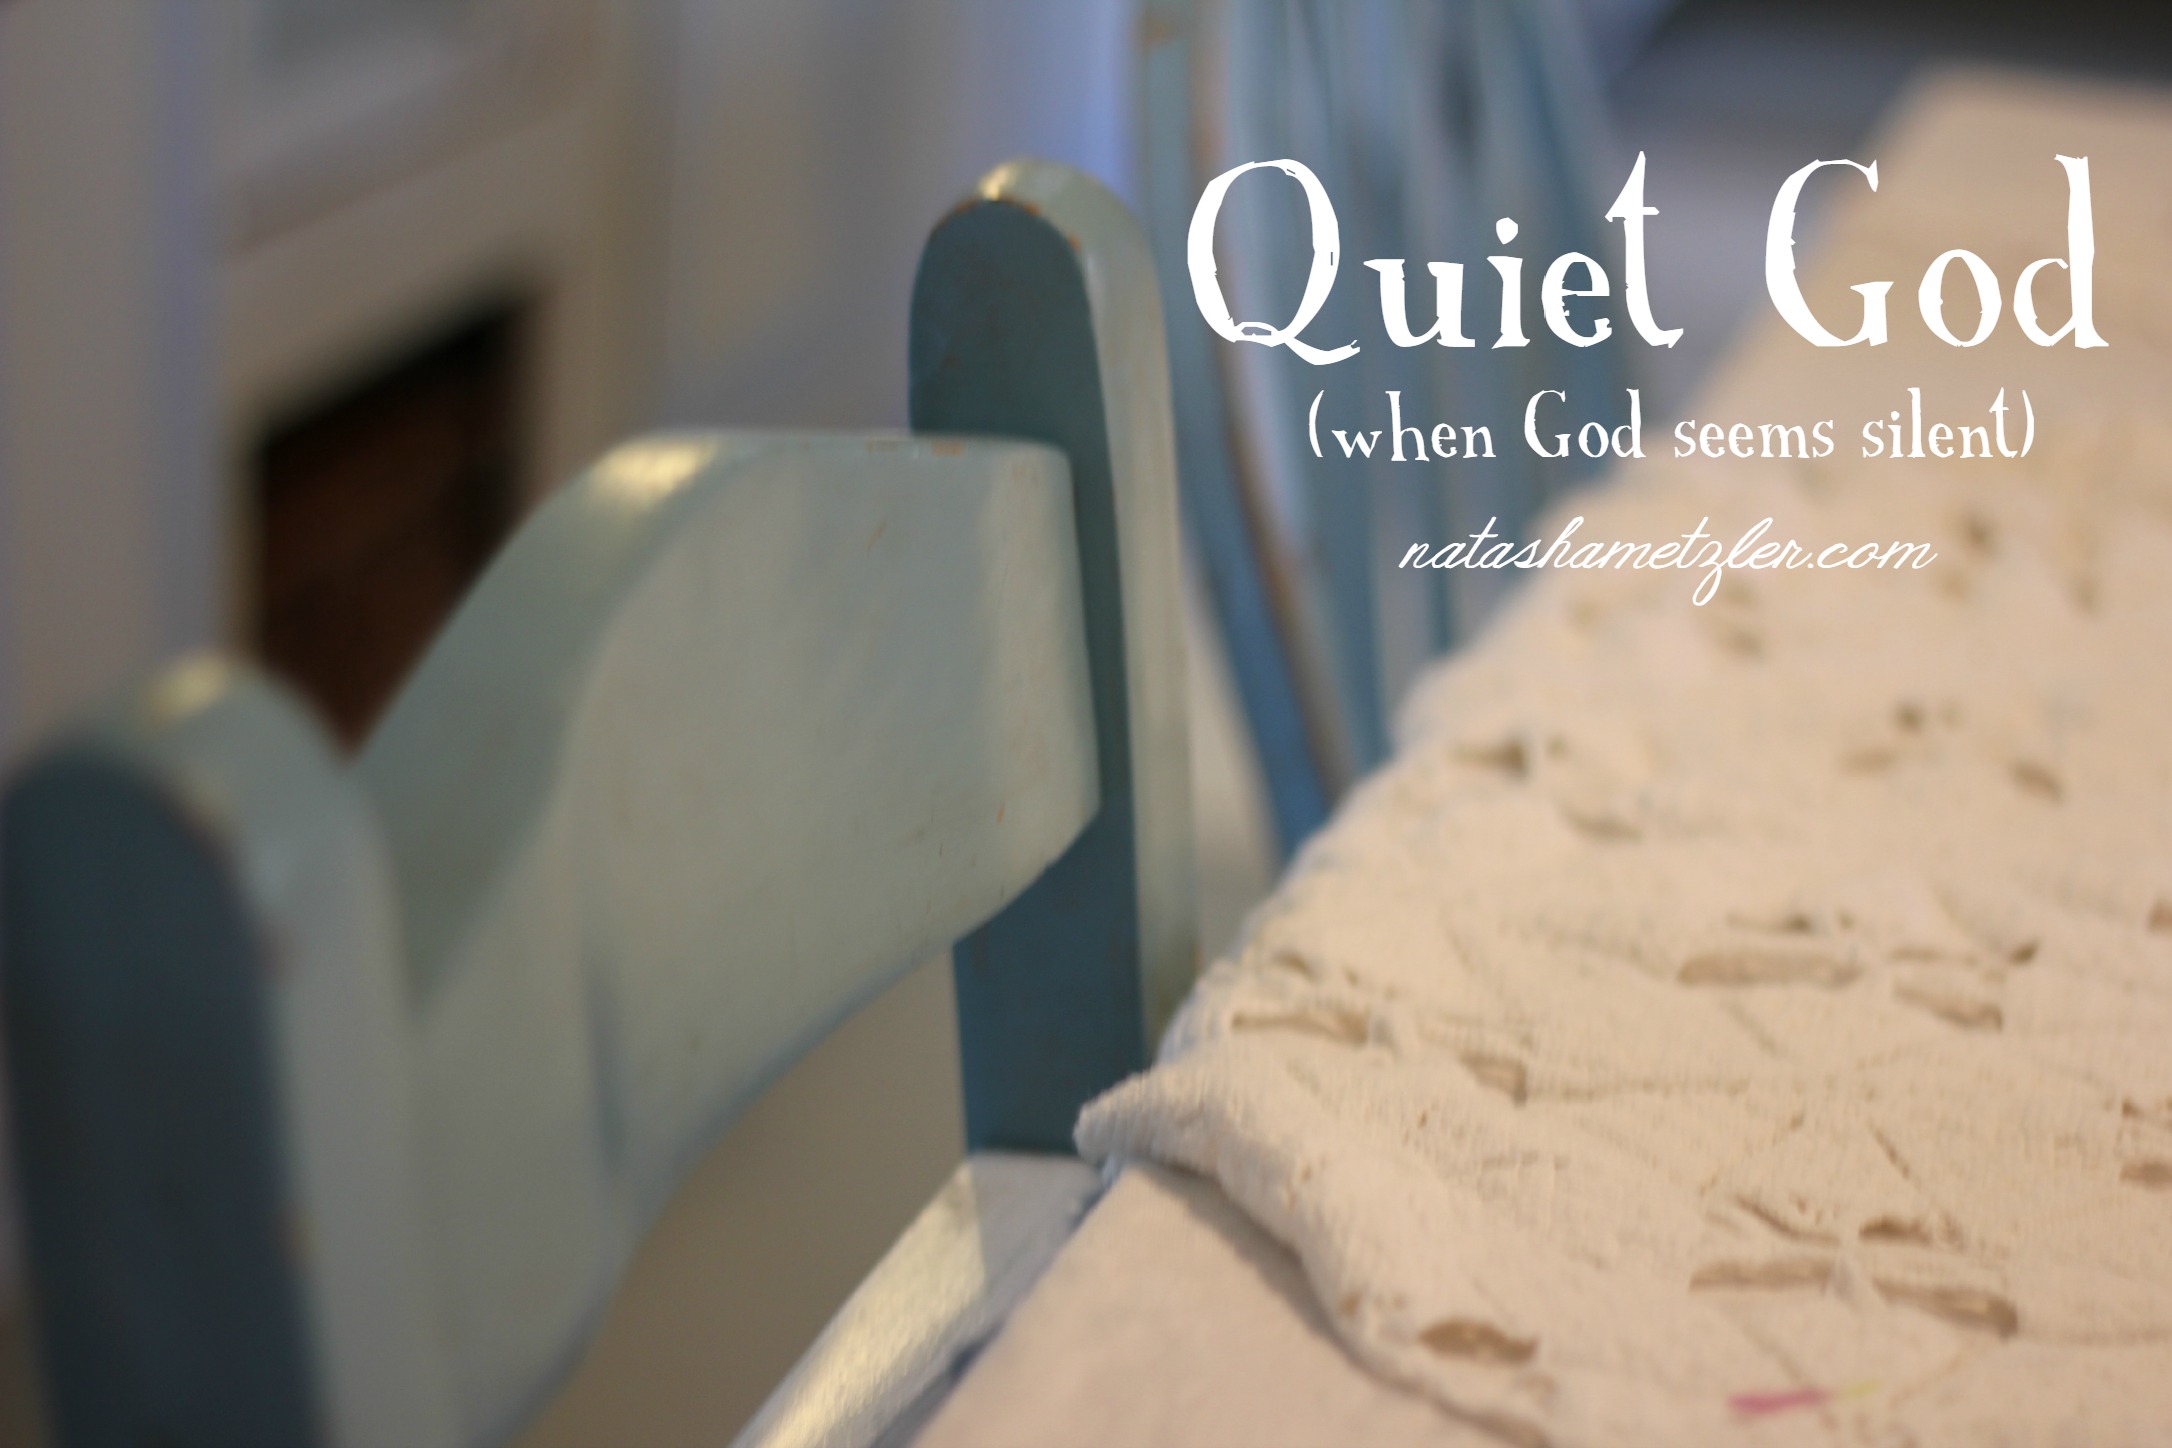 Quiet God (when God seems silent)